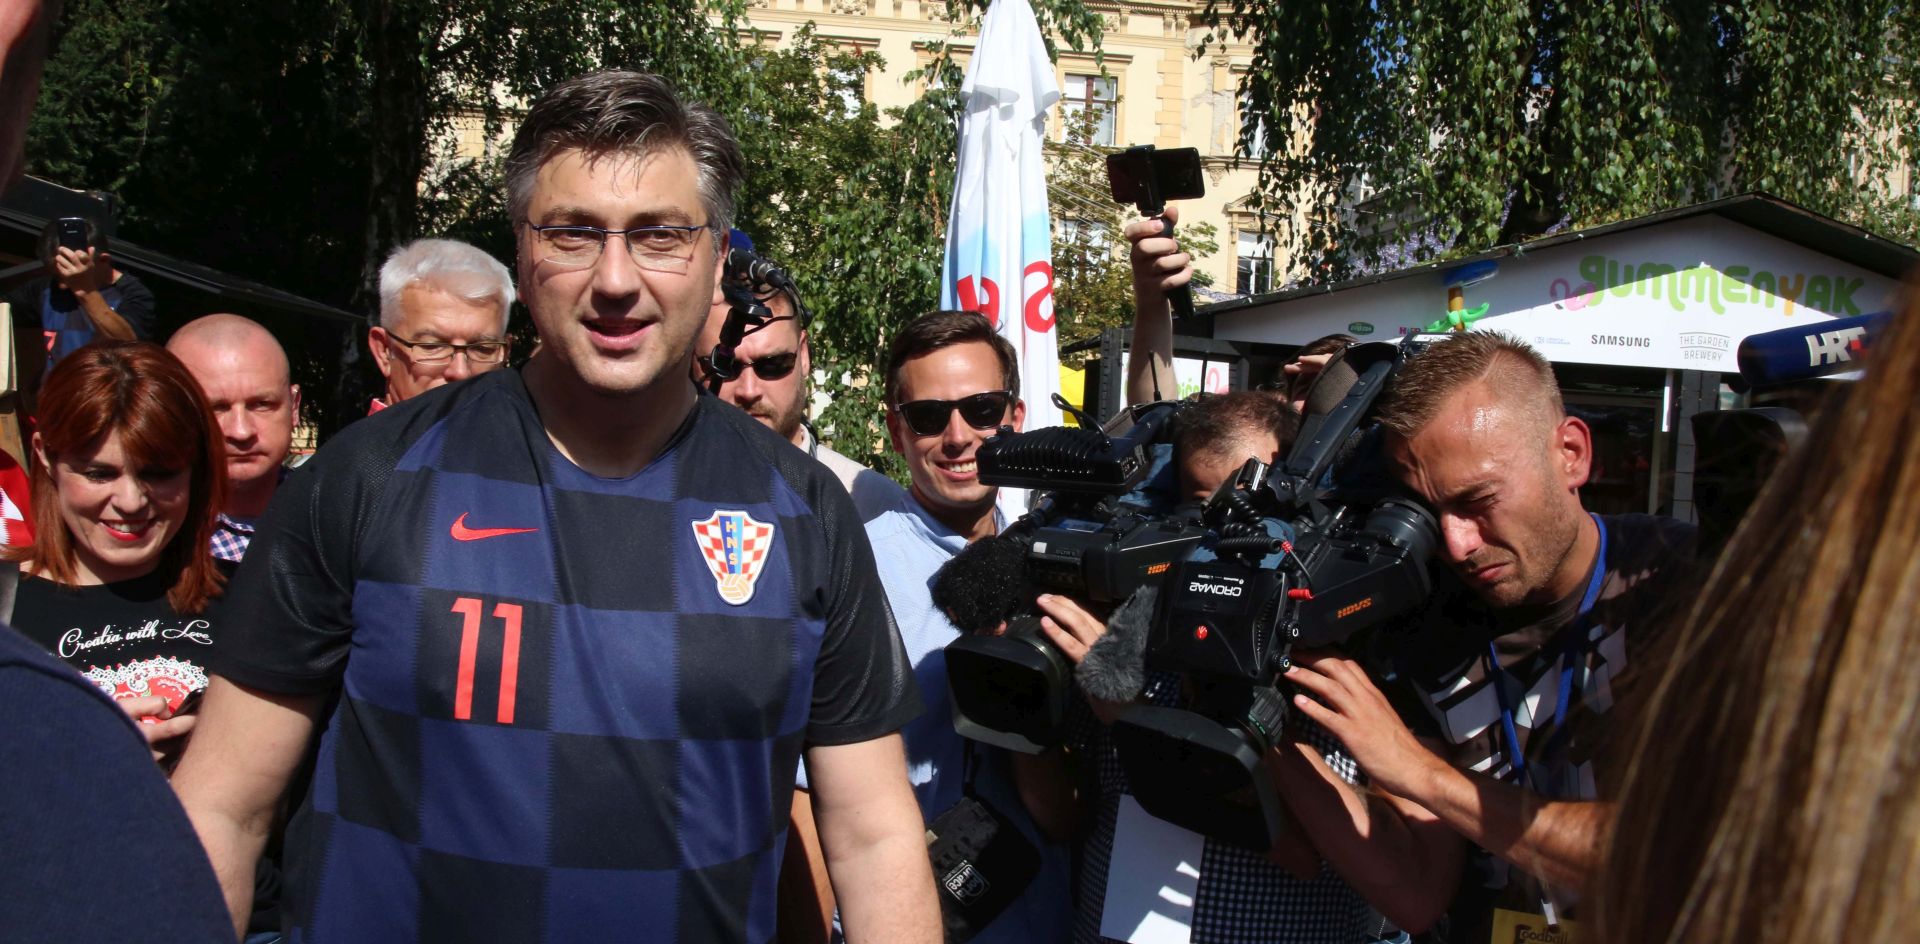 Zagreb, 15.07.2018 - Predsjednik Vlade RH Andrej Plenkoviæ na utakmici Hrvatska : Francuska. foto HINA /Zvonimir KUHTIÆ/ zk